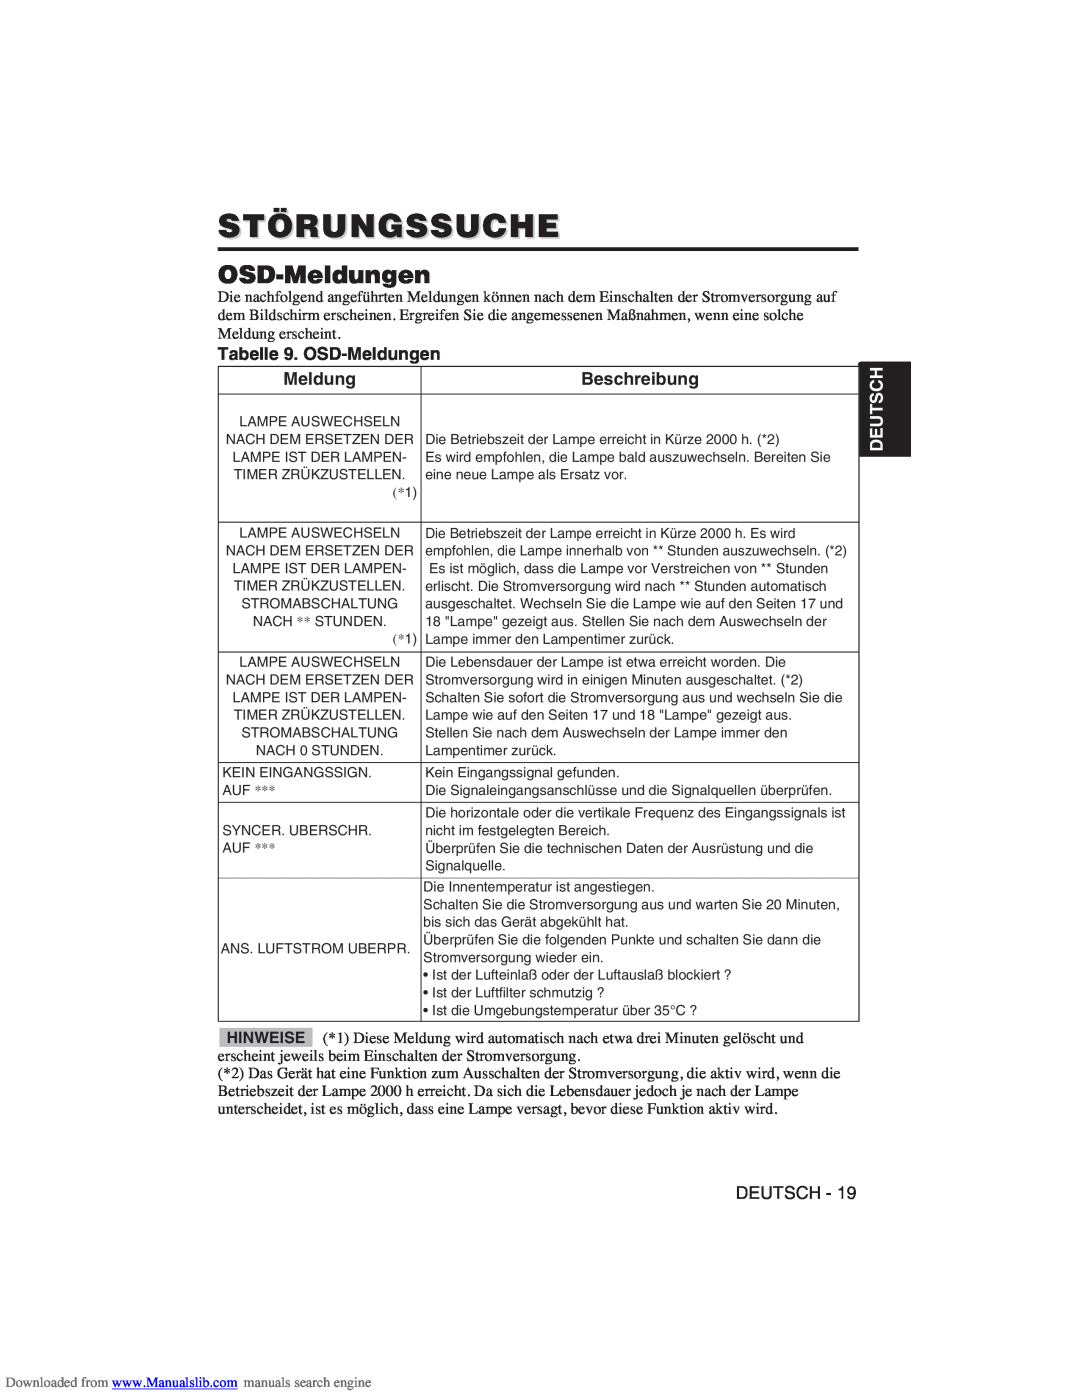 Hitachi CP-X275W user manual Störungssuche, Tabelle 9. OSD-Meldungen, Beschreibung, Deutsch 